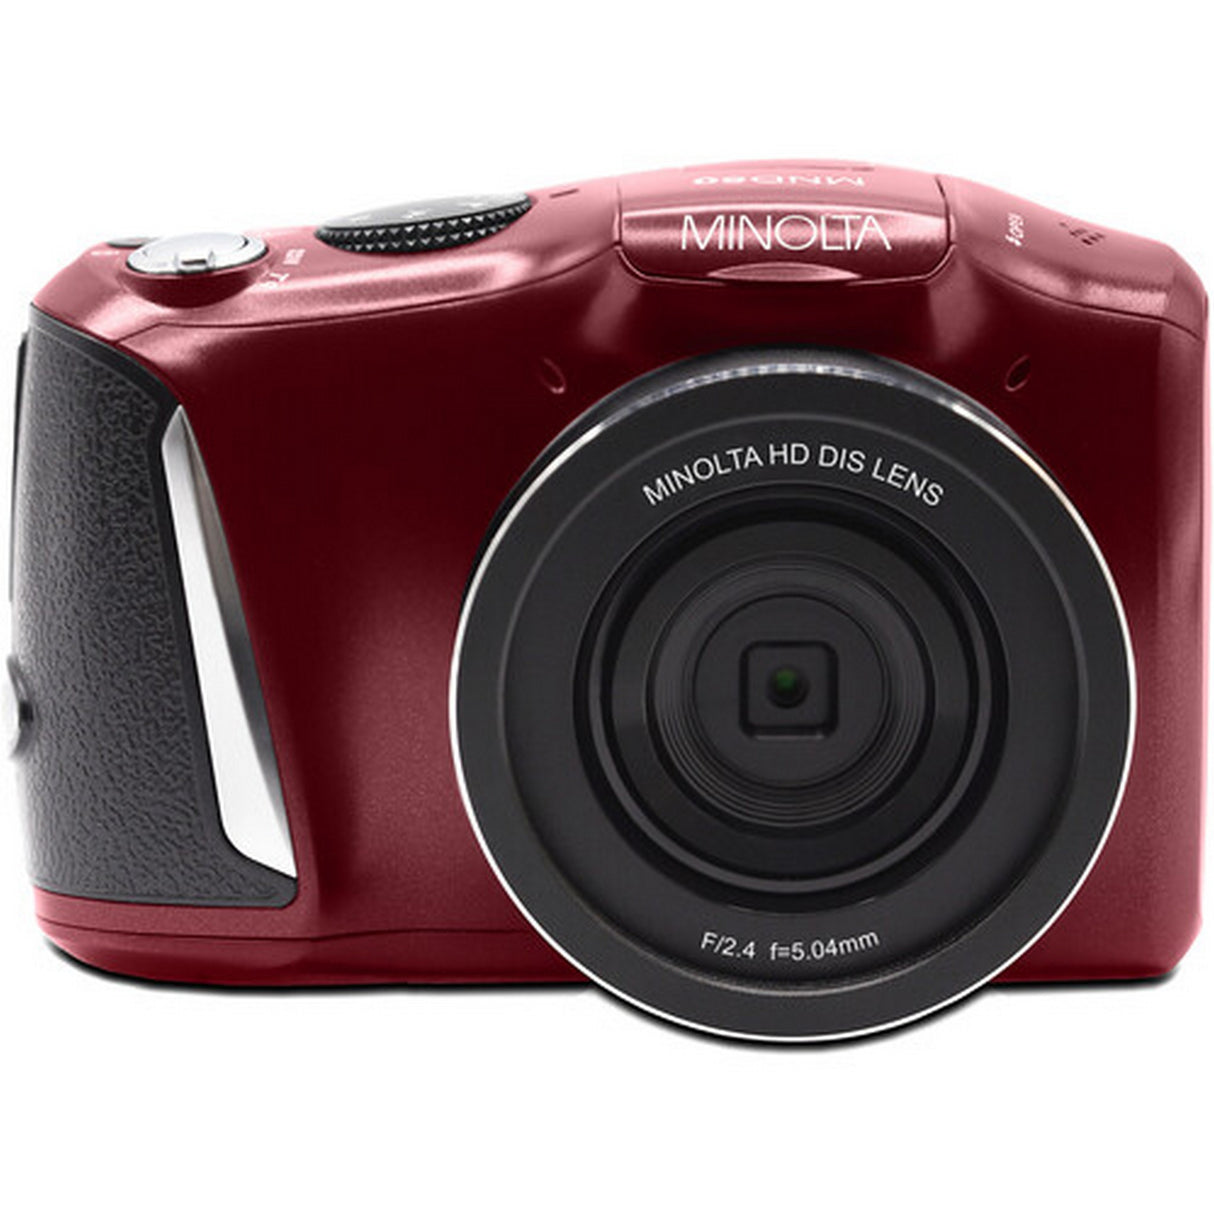 Minolta MND50 48 MP 4K Ultra HD Digital Camera, Red